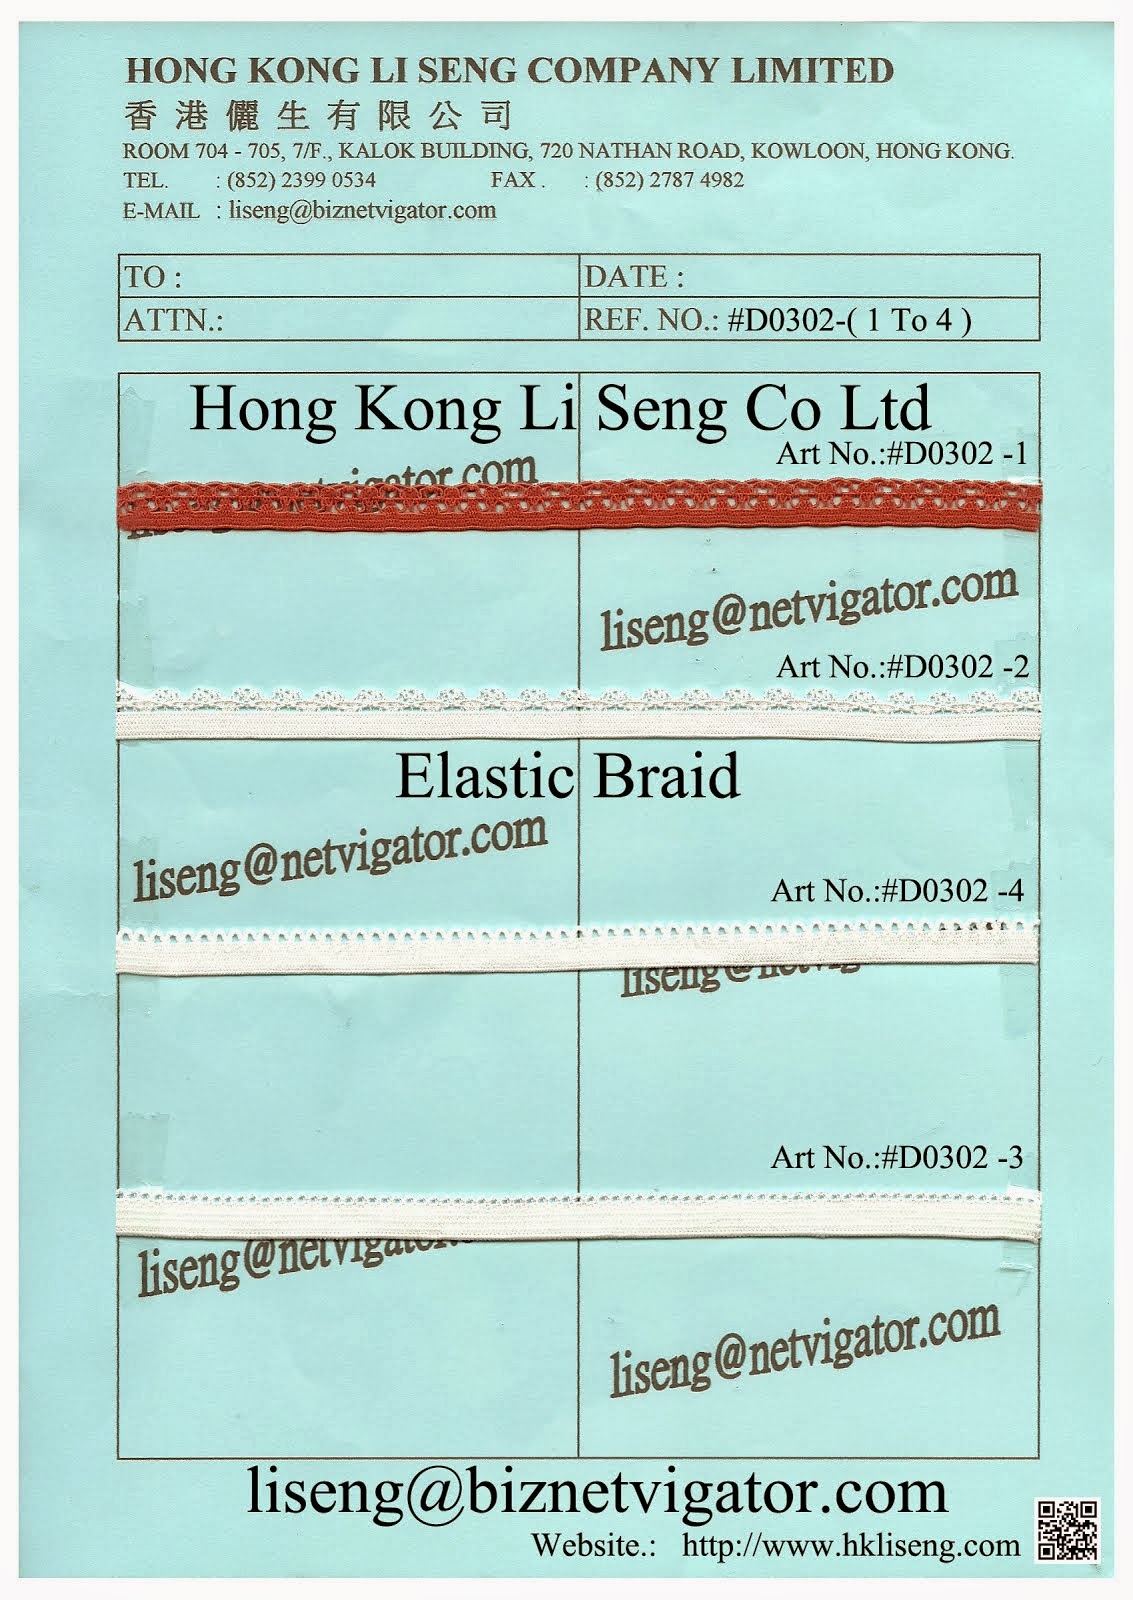 Elastic Braid Manufacturer - Hong Kong Li Seng Co Ltd